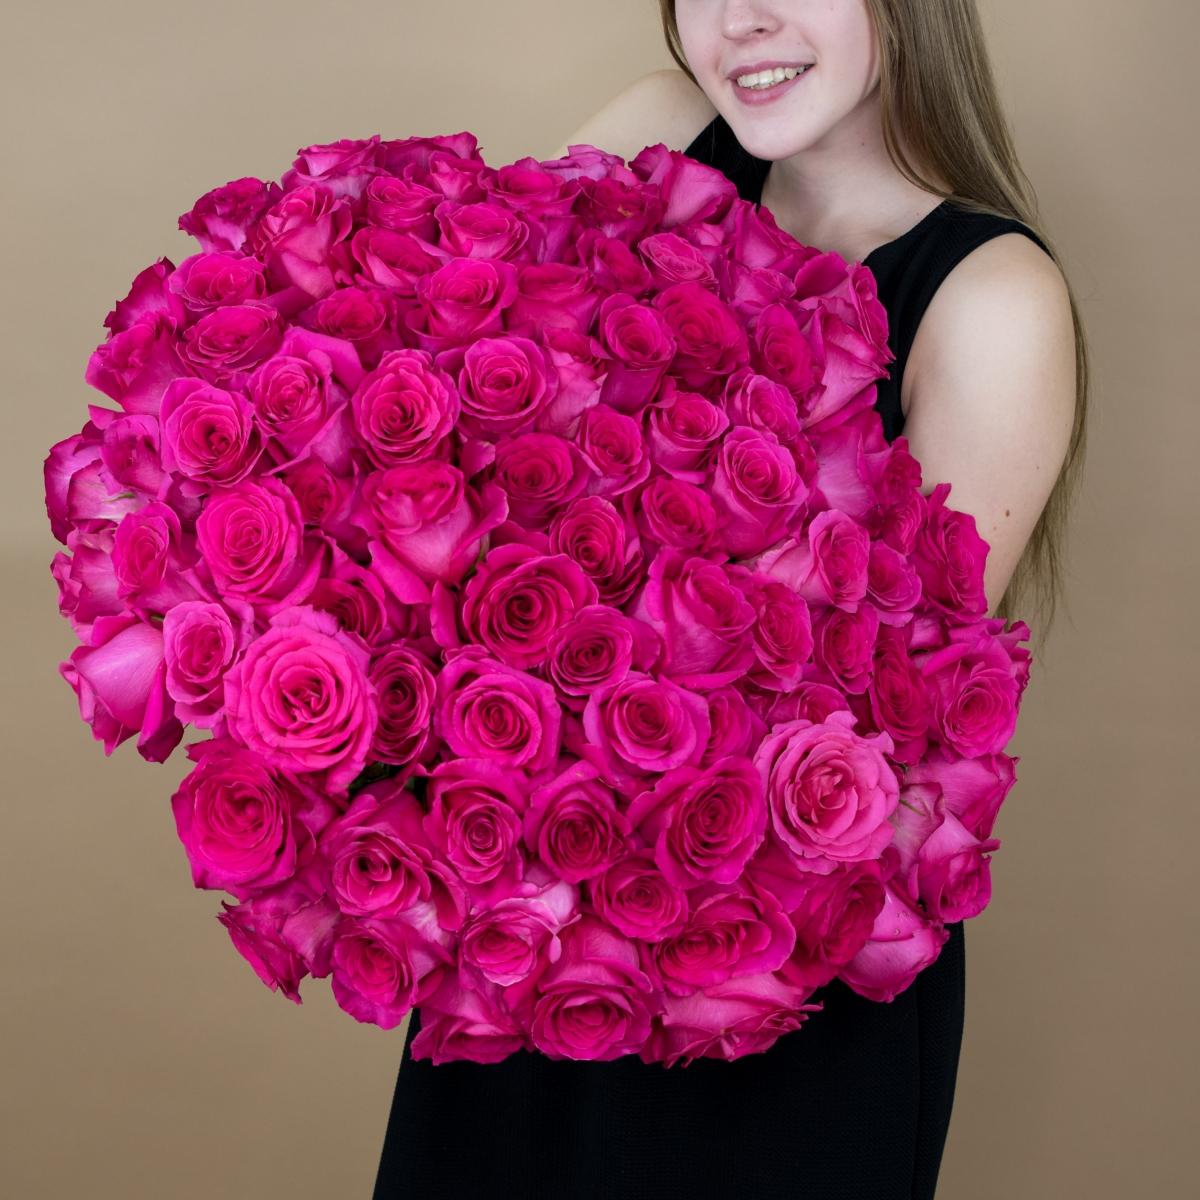 Букет из розовых роз 75 шт. (40 см) Артикул: 90552